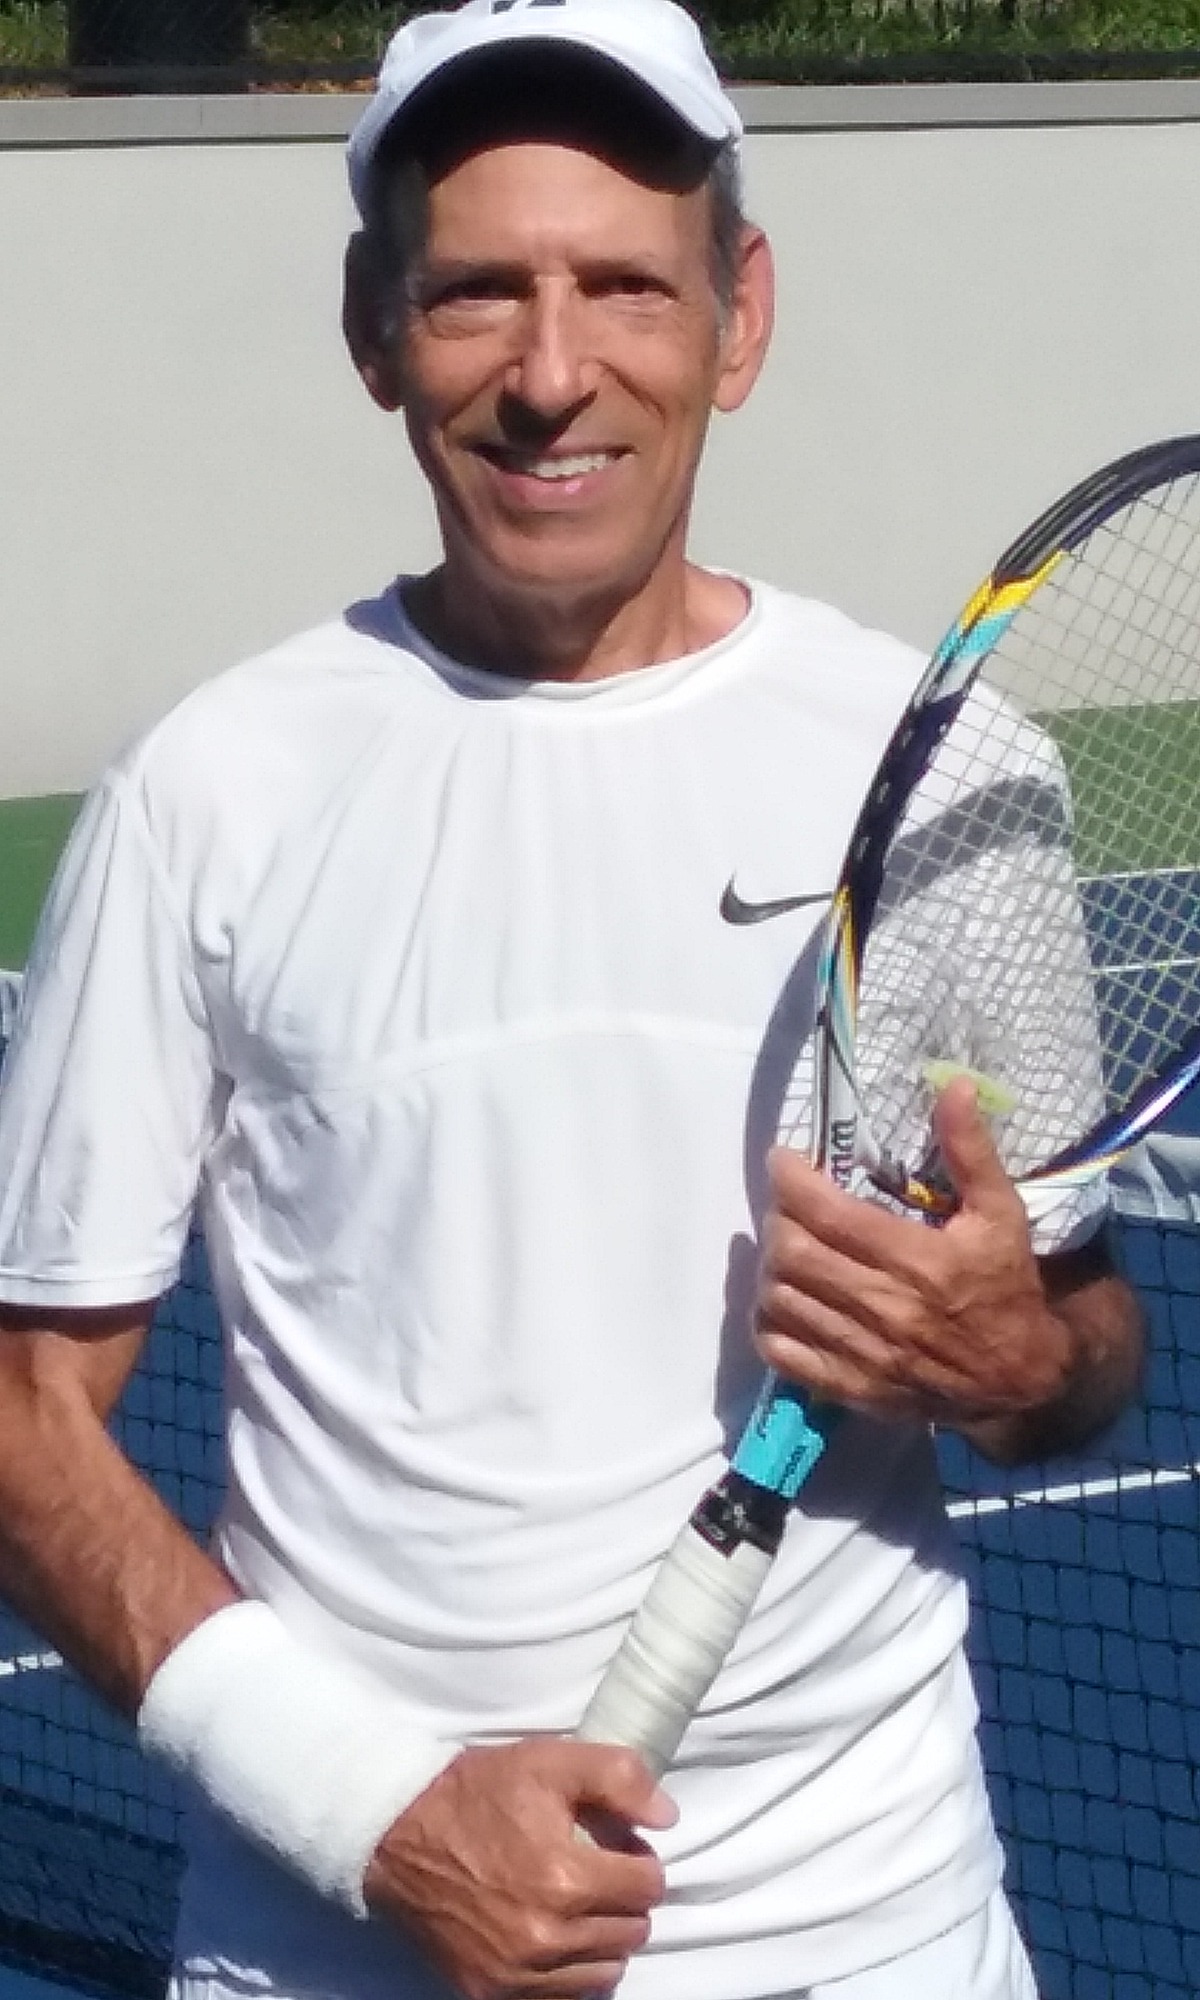 Jonny M. teaches tennis lessons in Brookhaven, GA